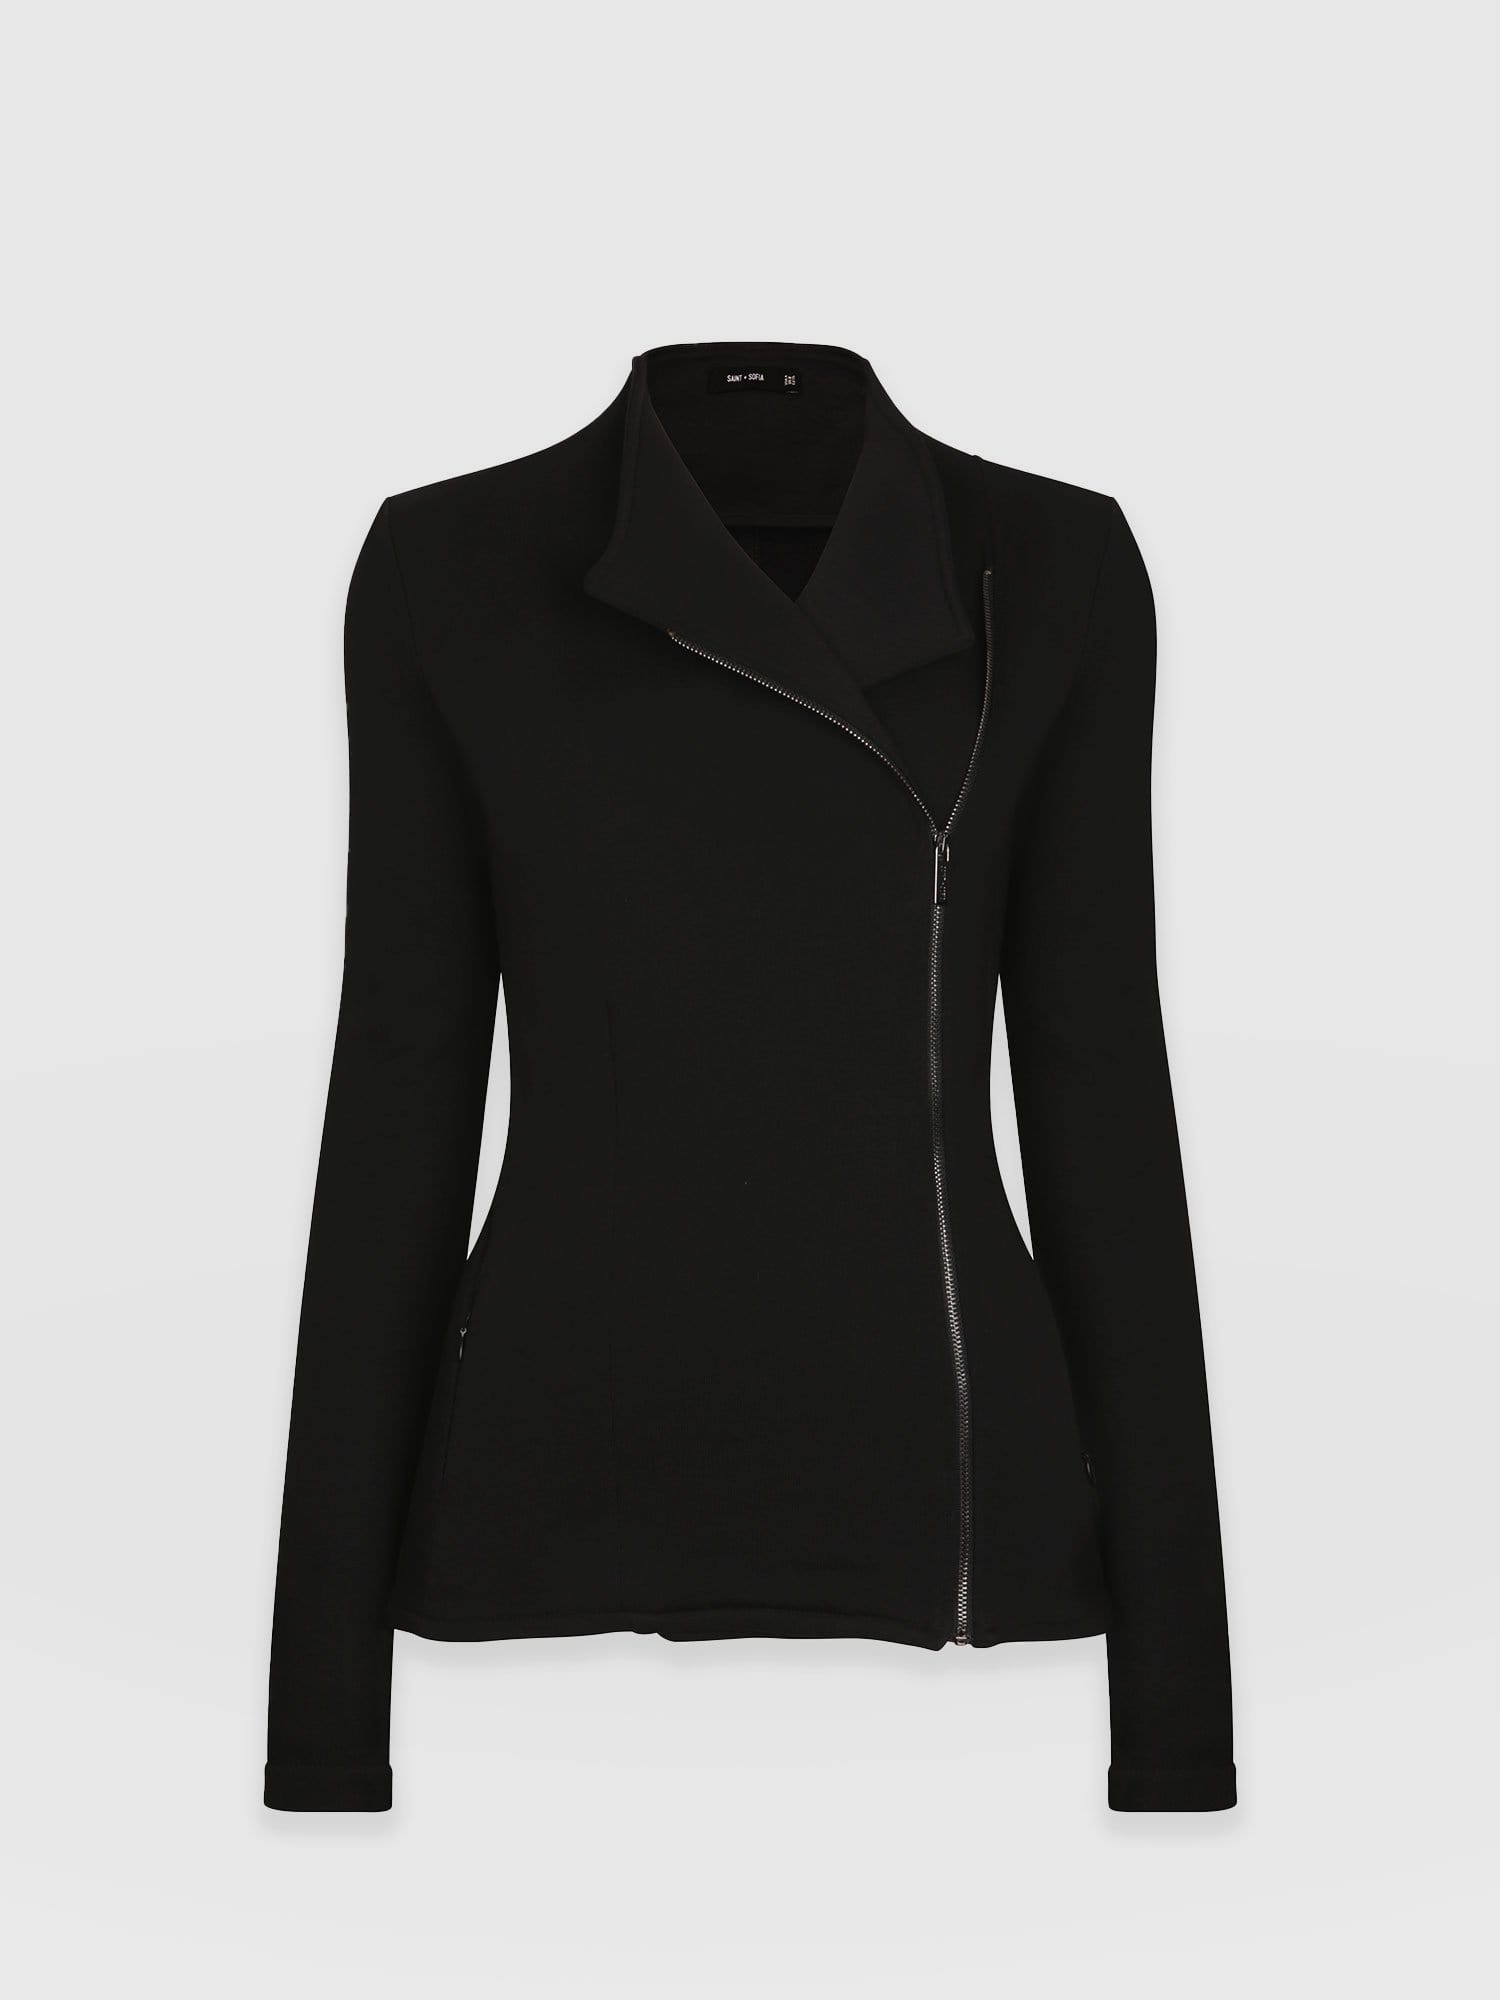 Shop for Black | Coats & Jackets | Womens | online at Freemans